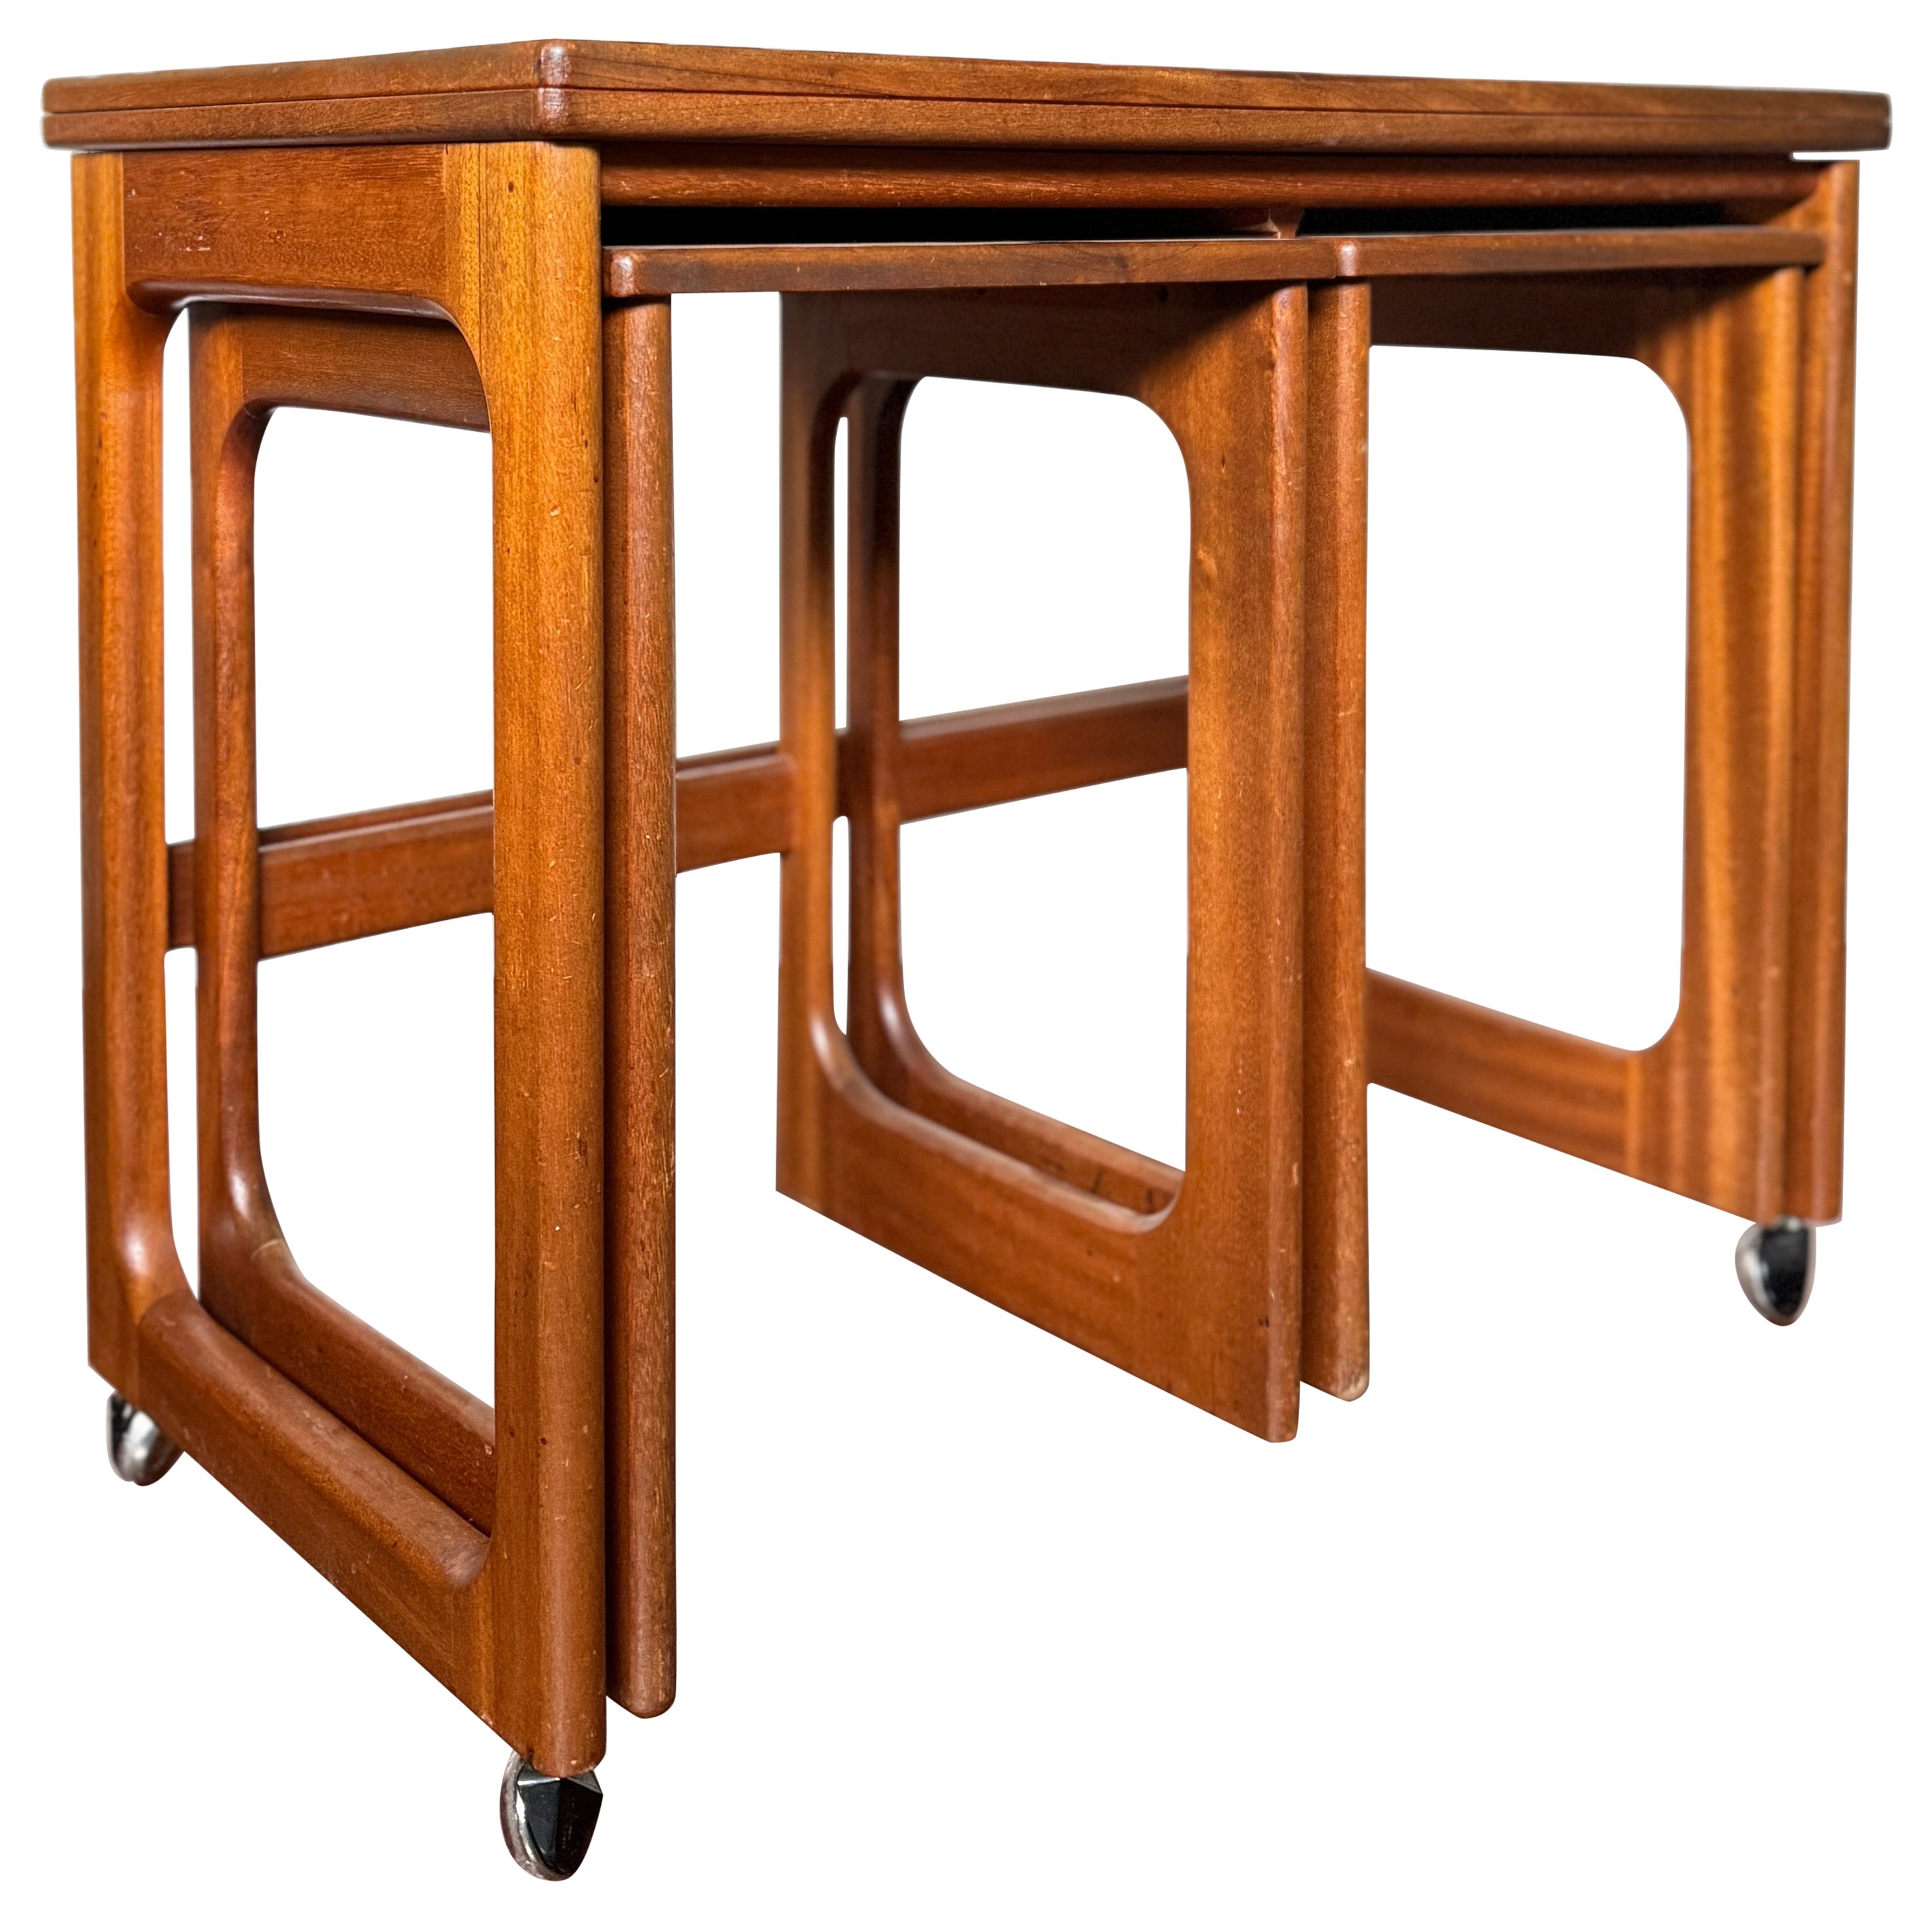 Multifunctional mid century extendable teak table by McIntosh, circa 1960s